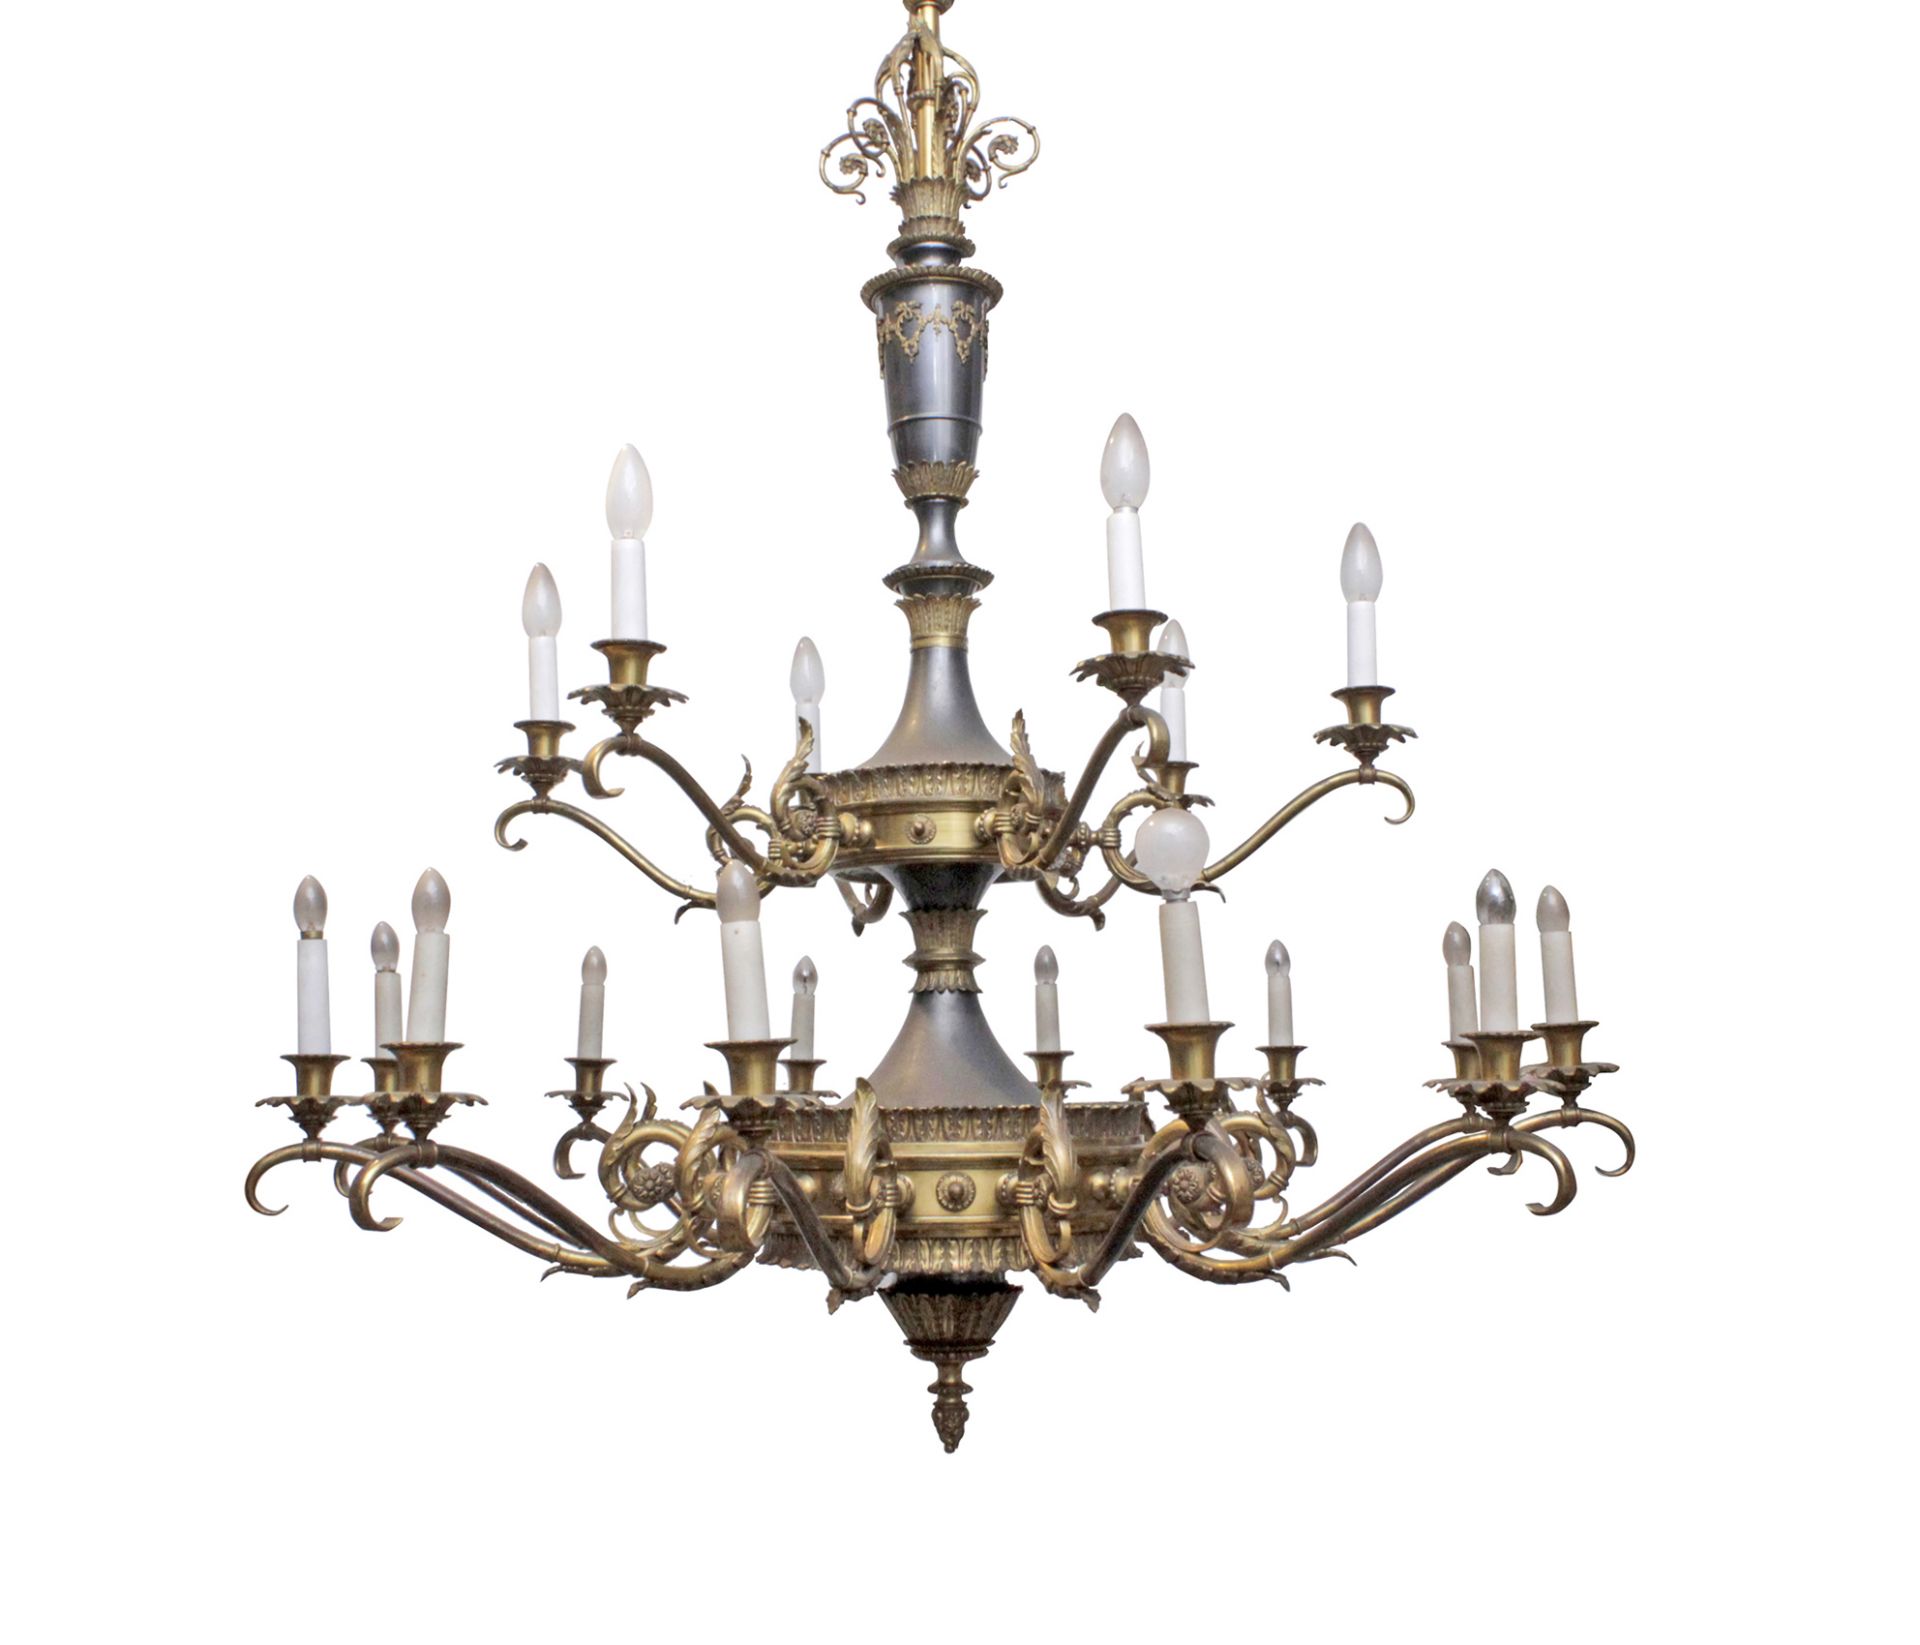 20th century Empire style twelve light bronze chandelier